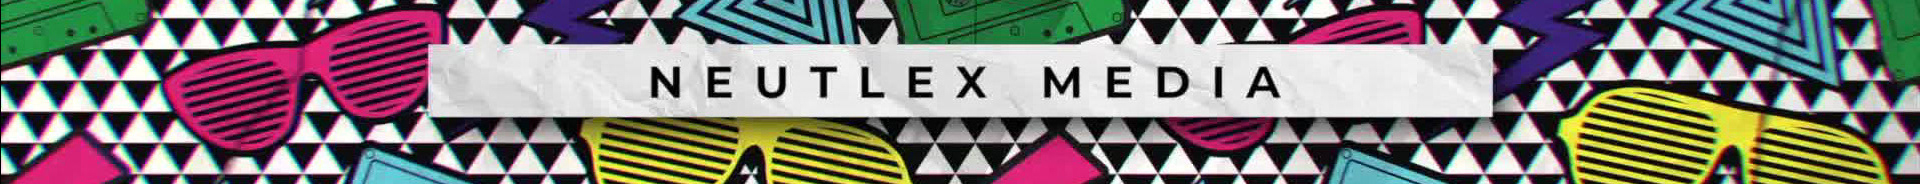 Neutlex Agency's profile banner